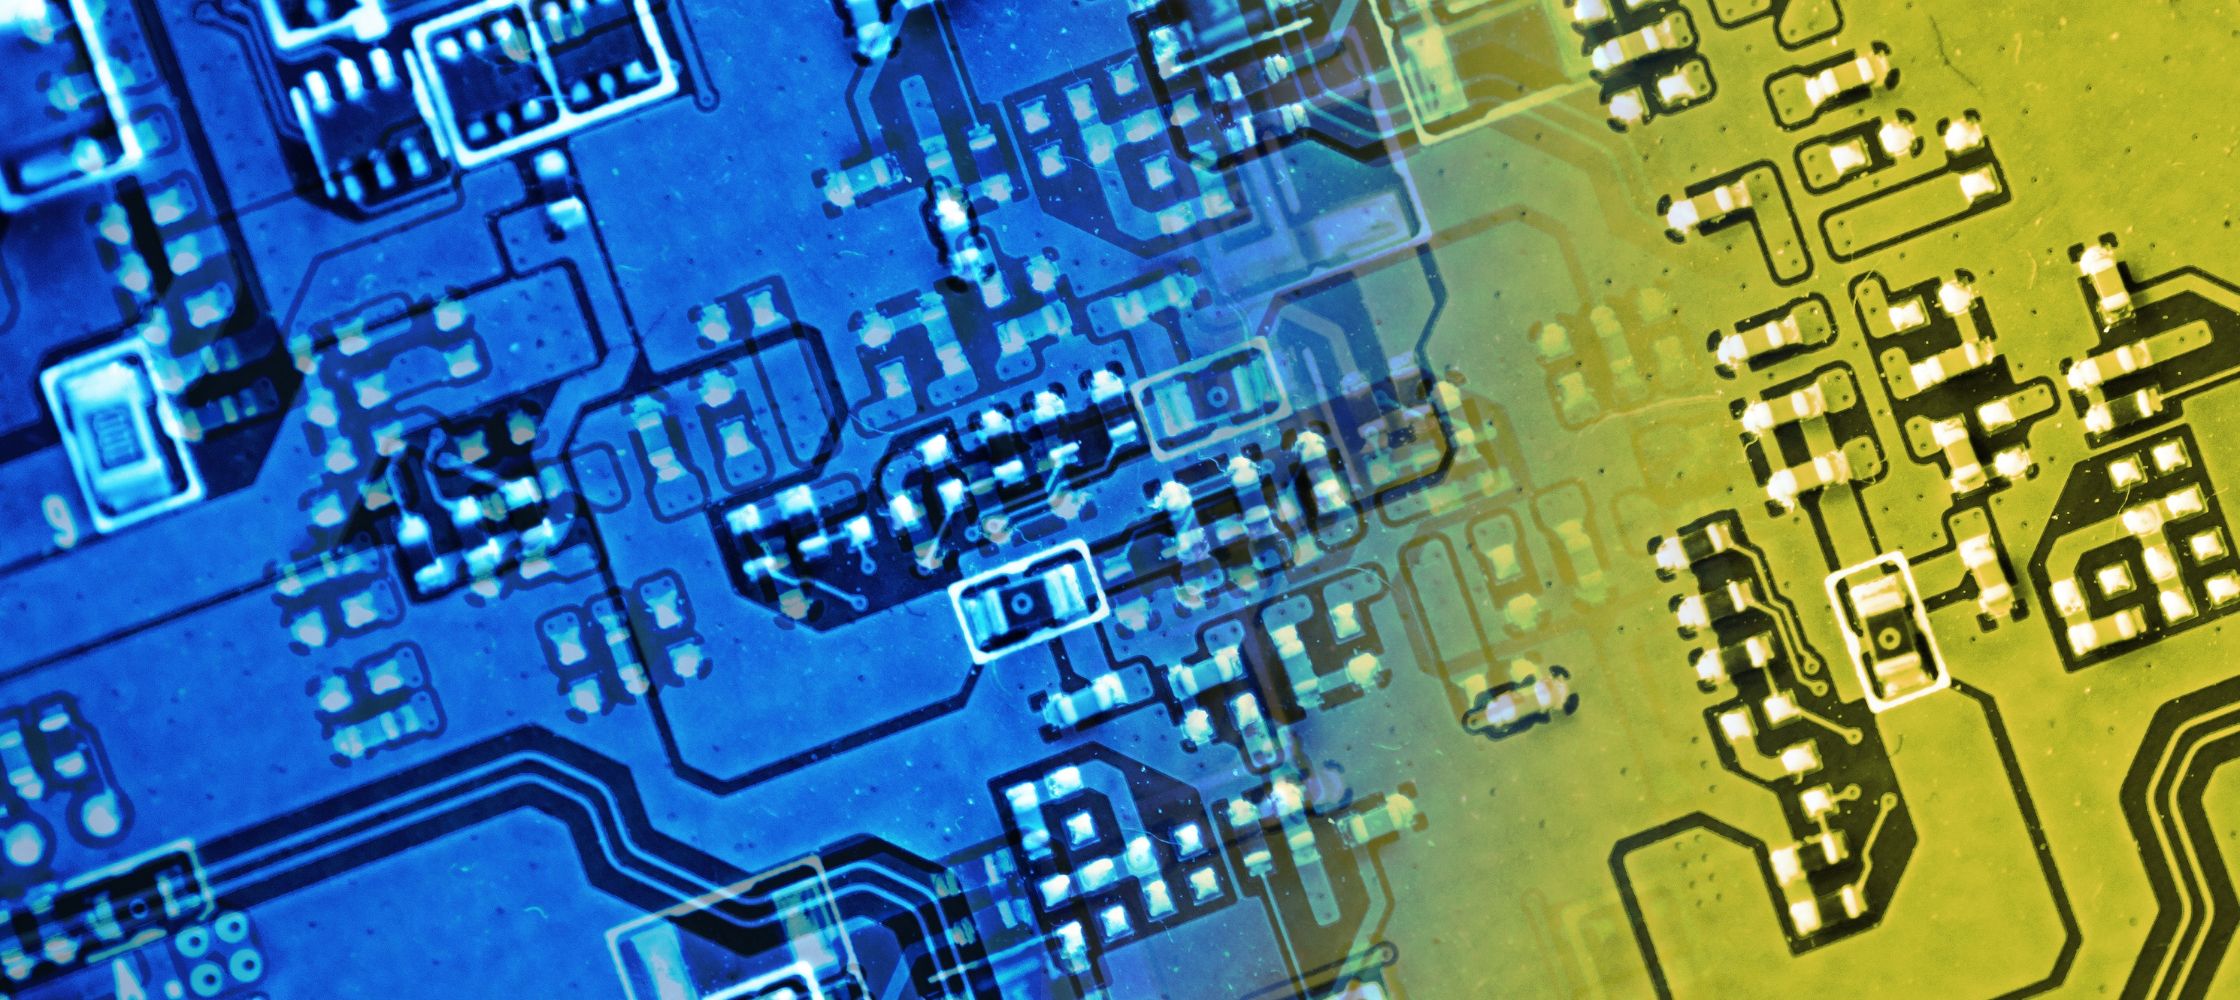 integrated circuit board maxxess blog